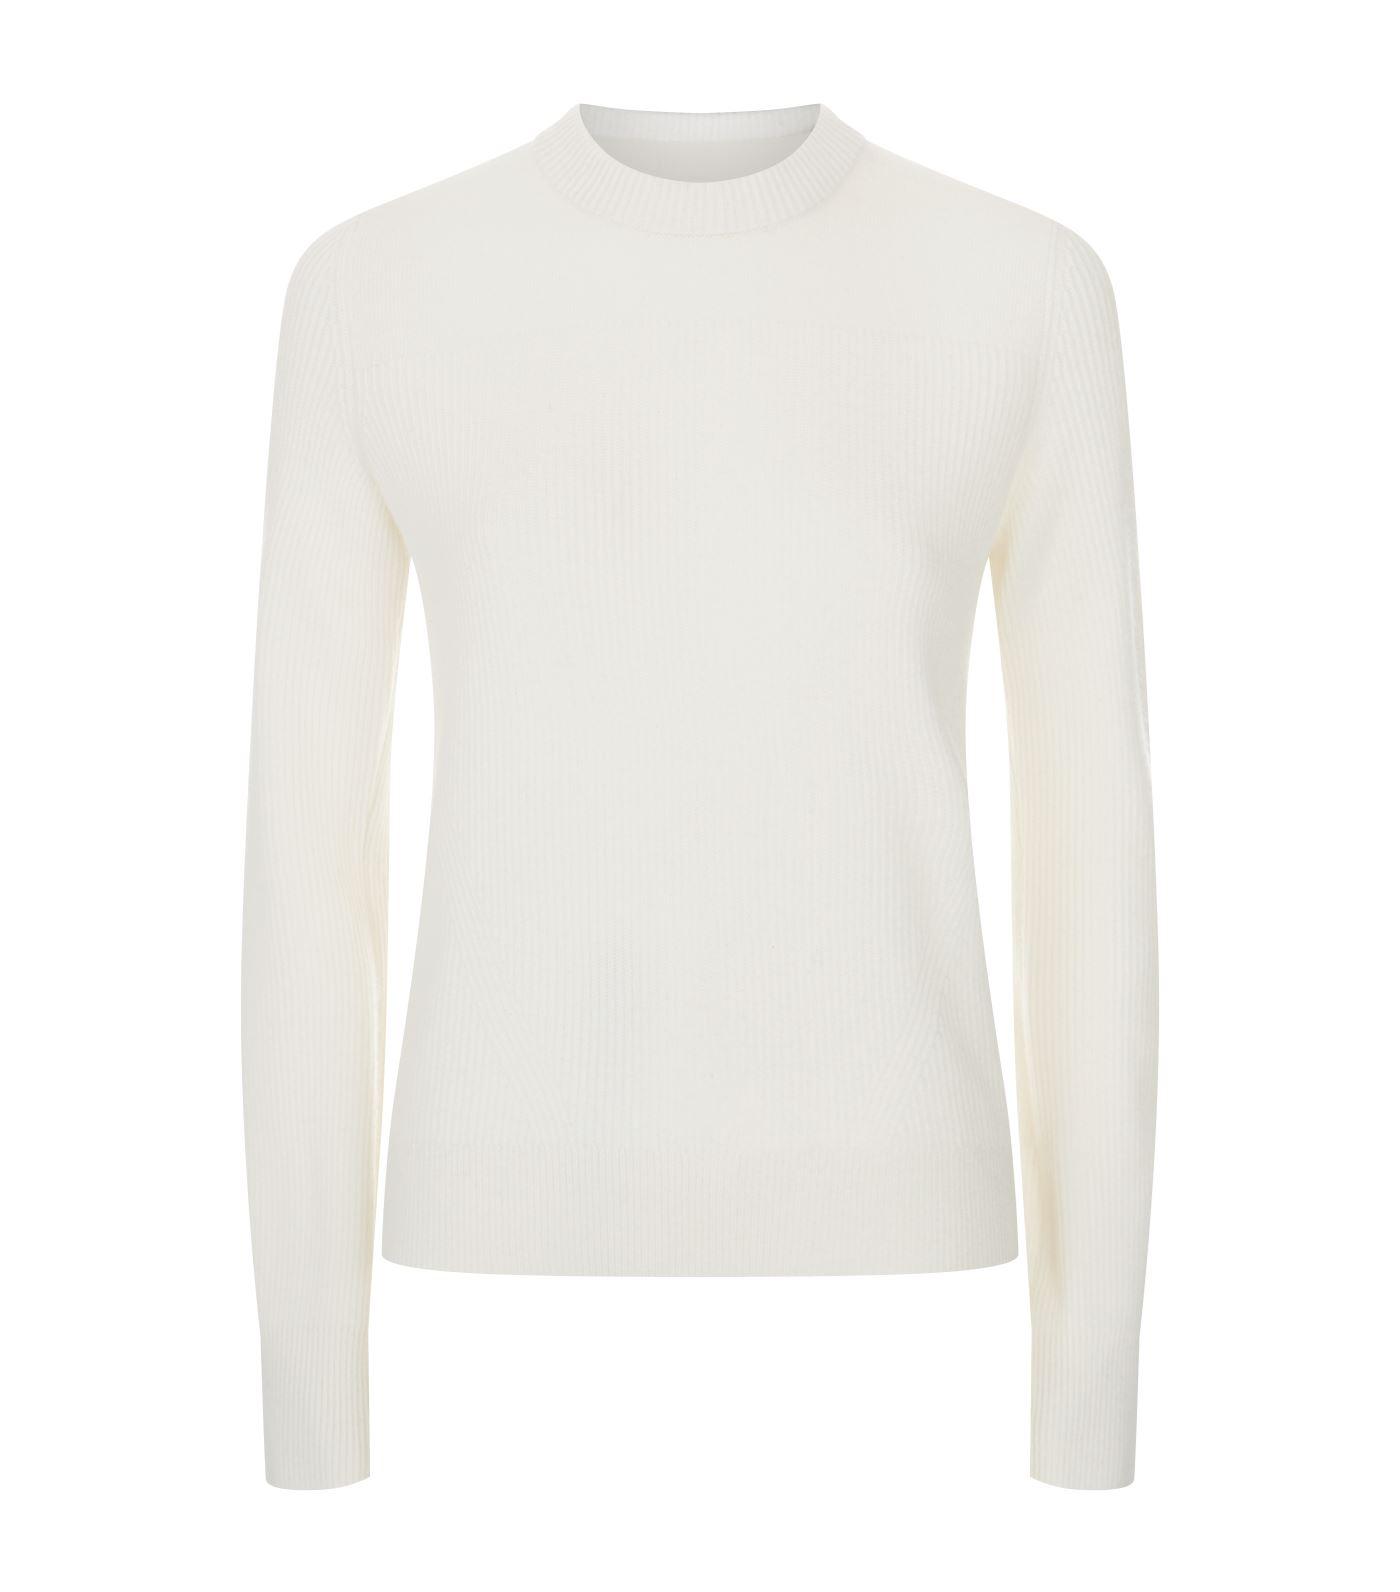 Lyst - Rag & Bone Denise Sweater in White